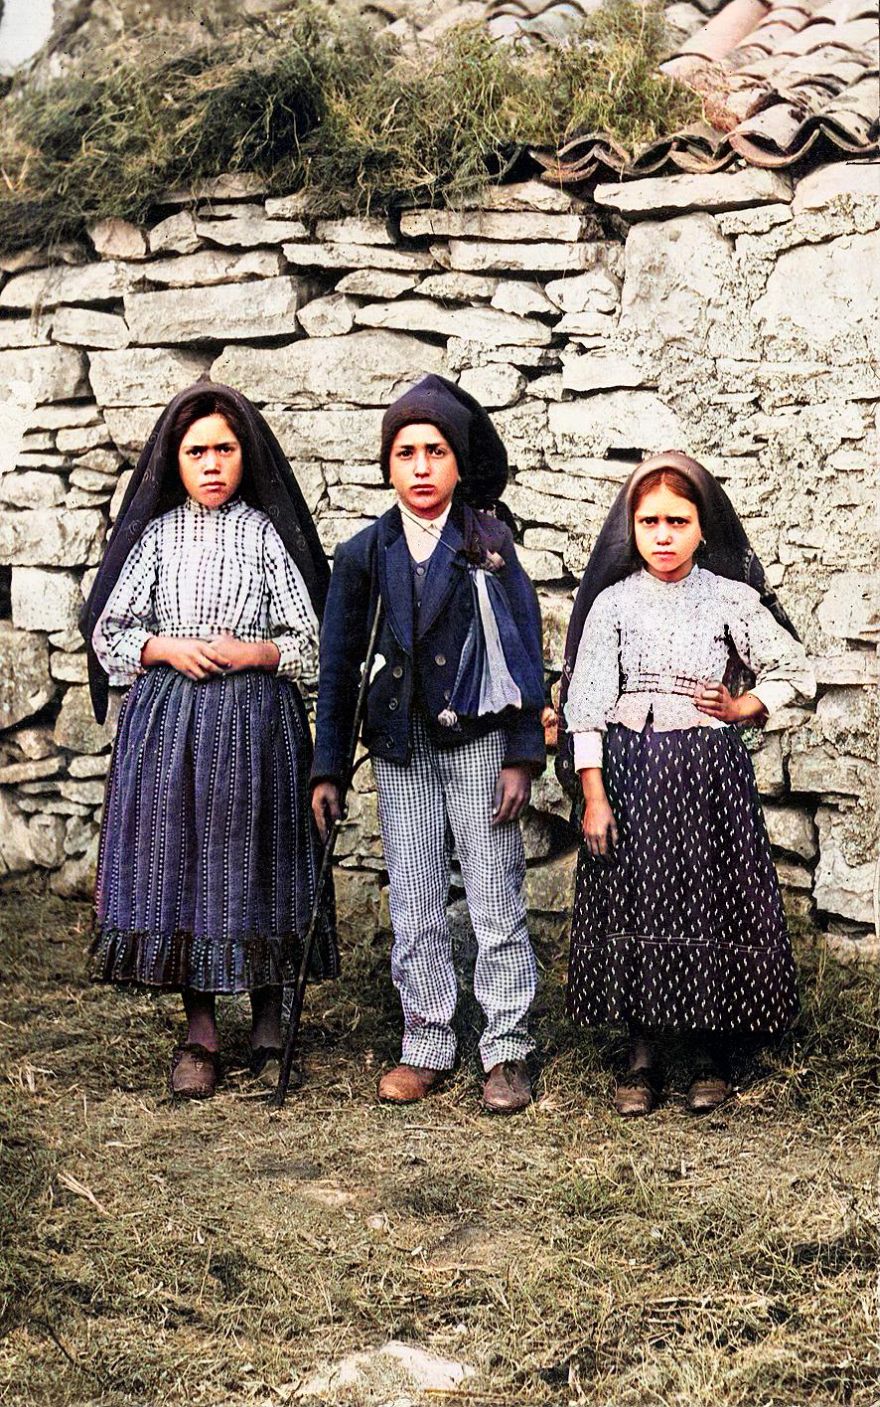 Lúcia Santos, Jacinta and Francisco Marto